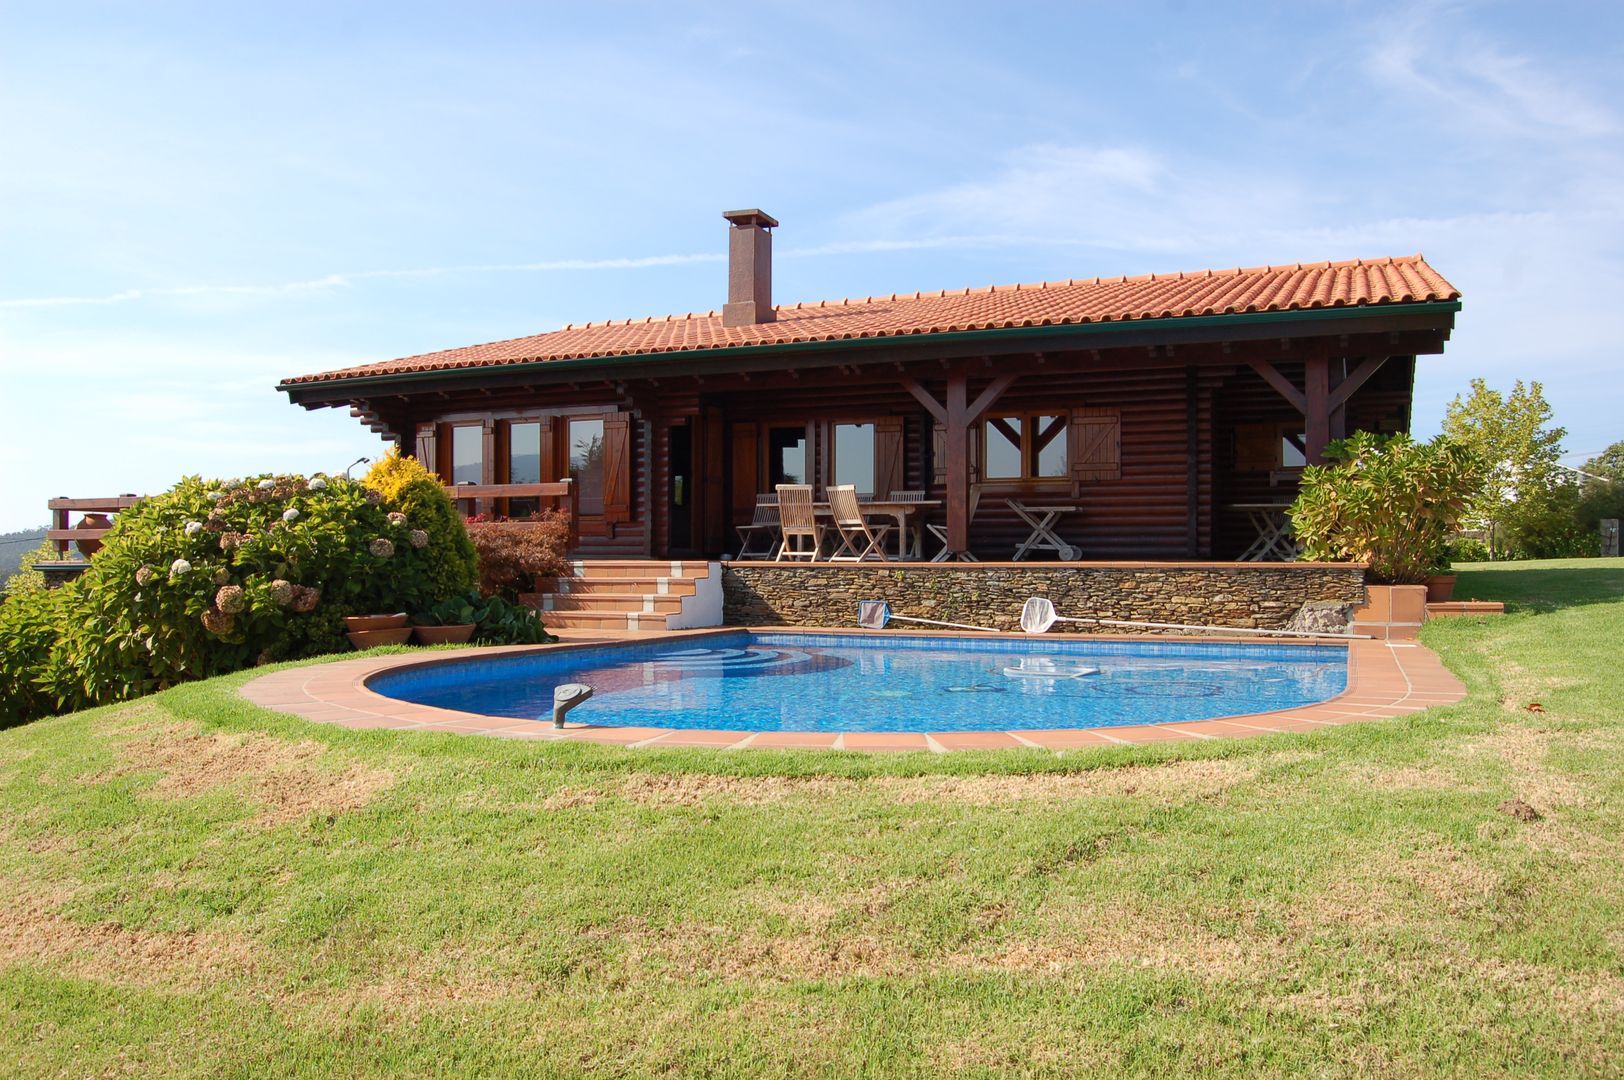 RUSTICASA | Casa na ria | Pontevedra, RUSTICASA RUSTICASA Rumah kayu Parket Multicolored